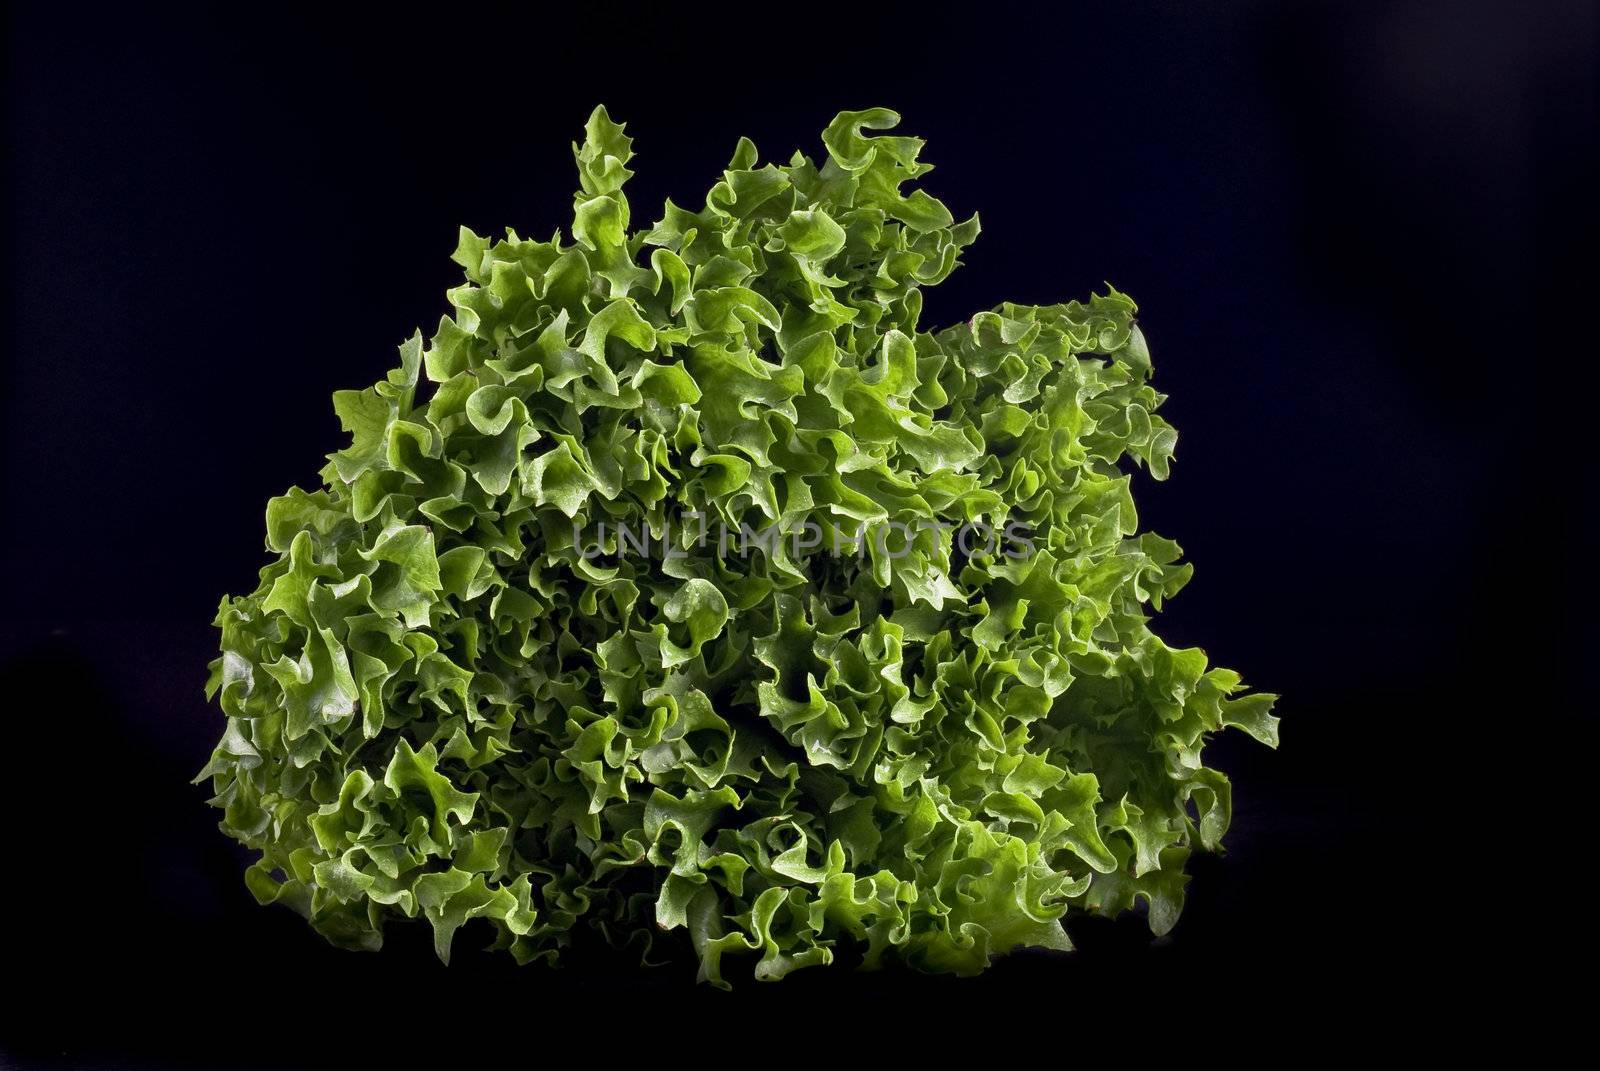 Green lettuce by caldix